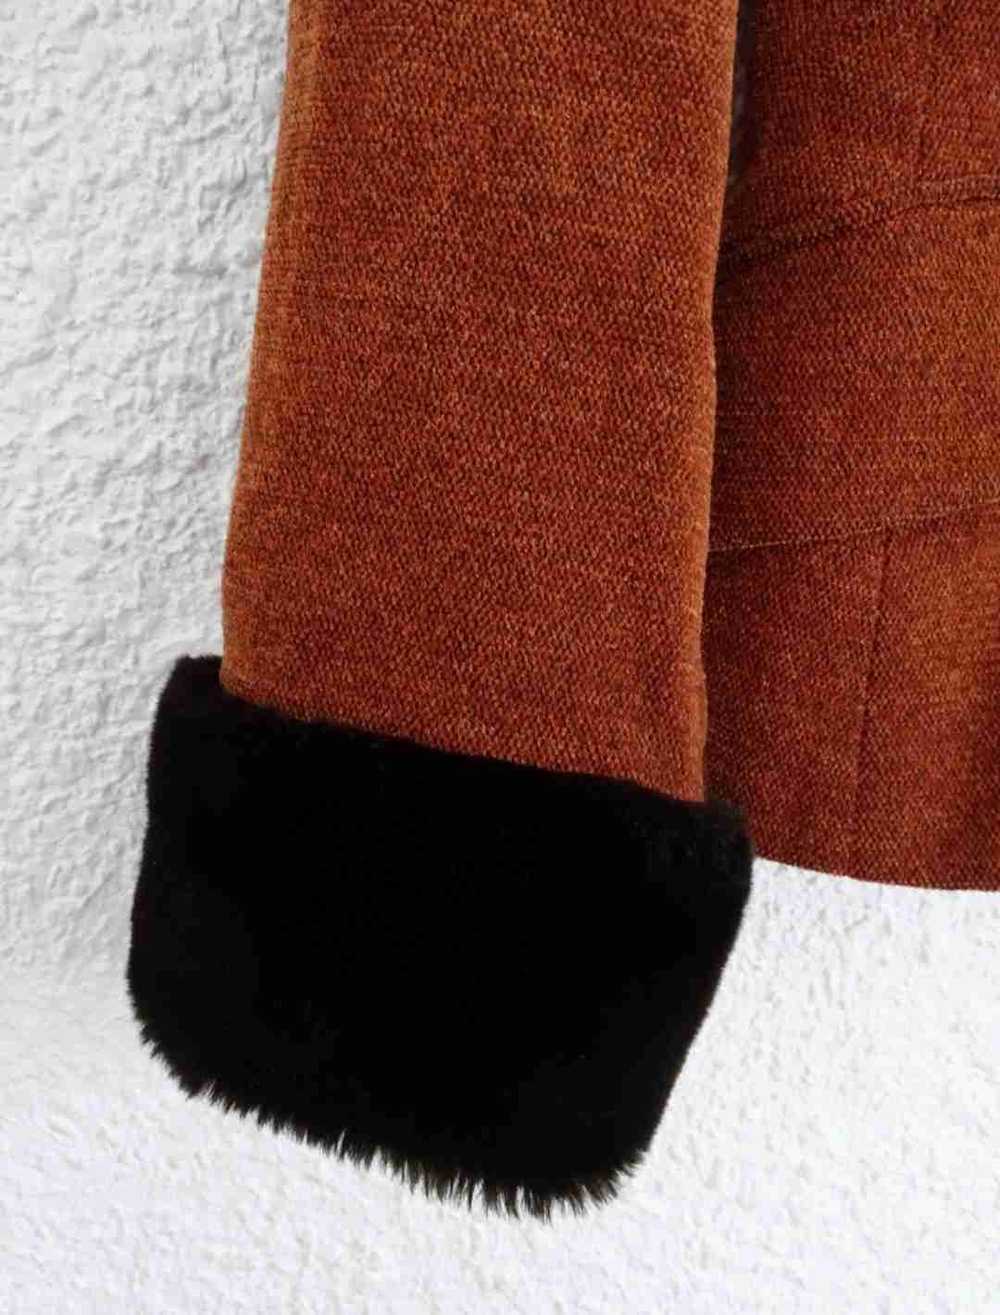 Wool jacket - Wool jacket, faux fur collar and cu… - image 3